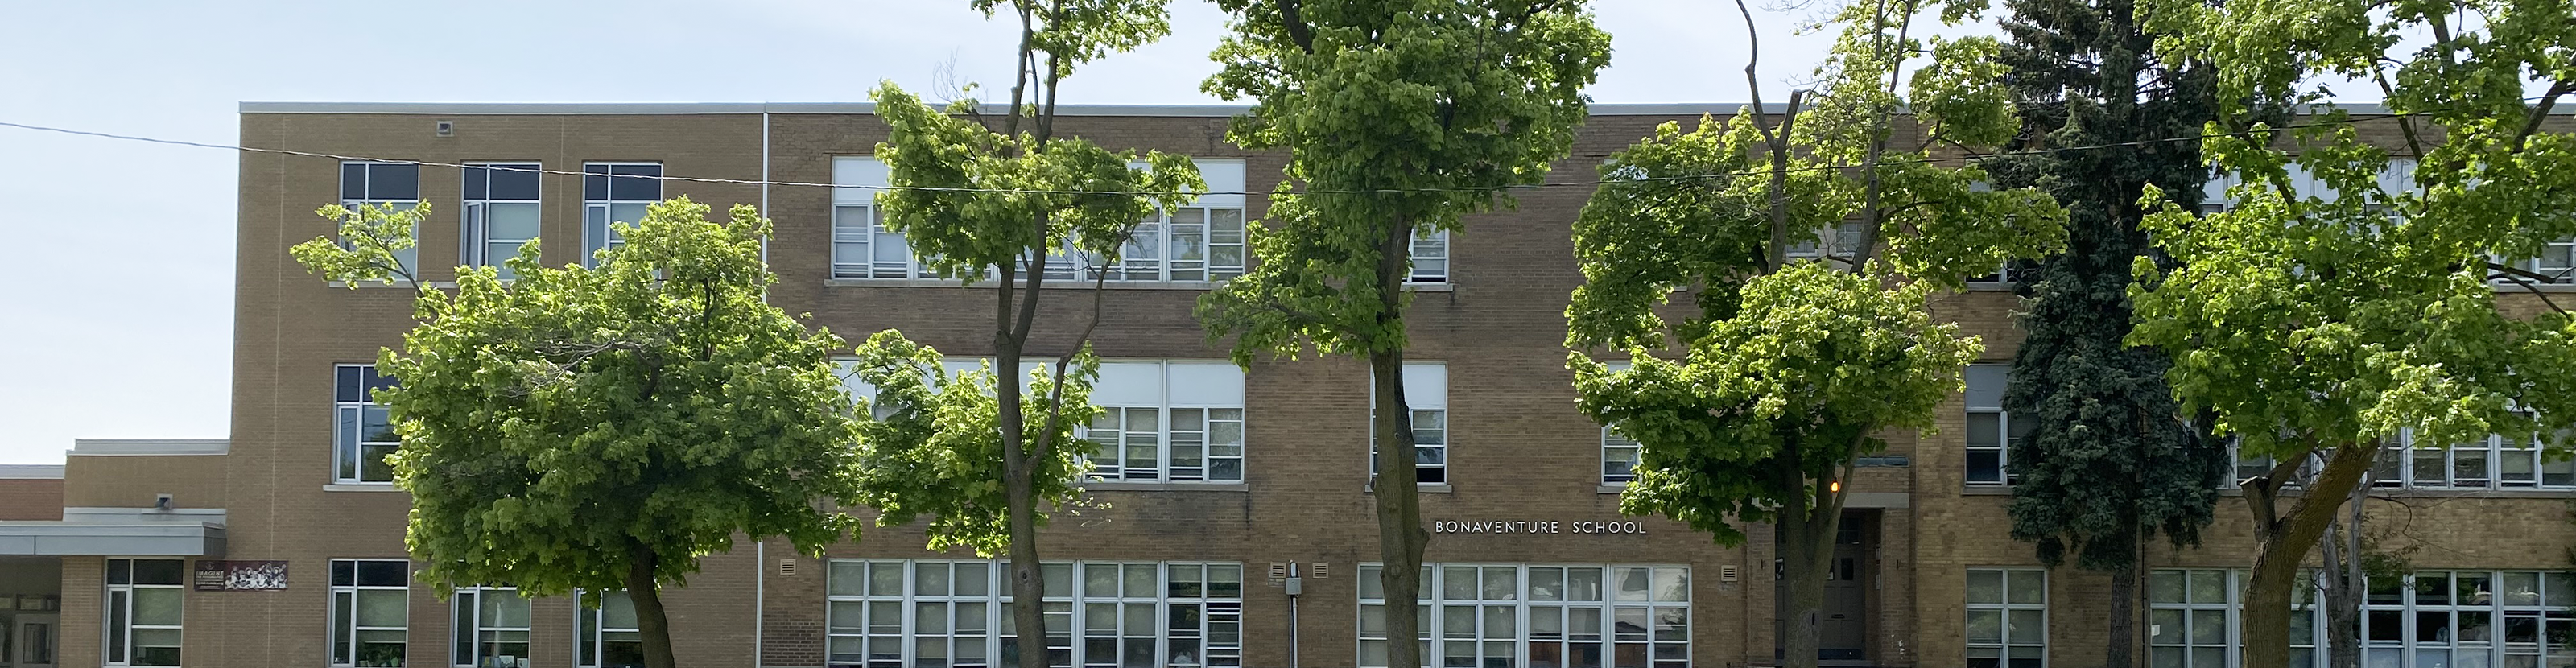 The front of the St. Bonaventure Catholic School building